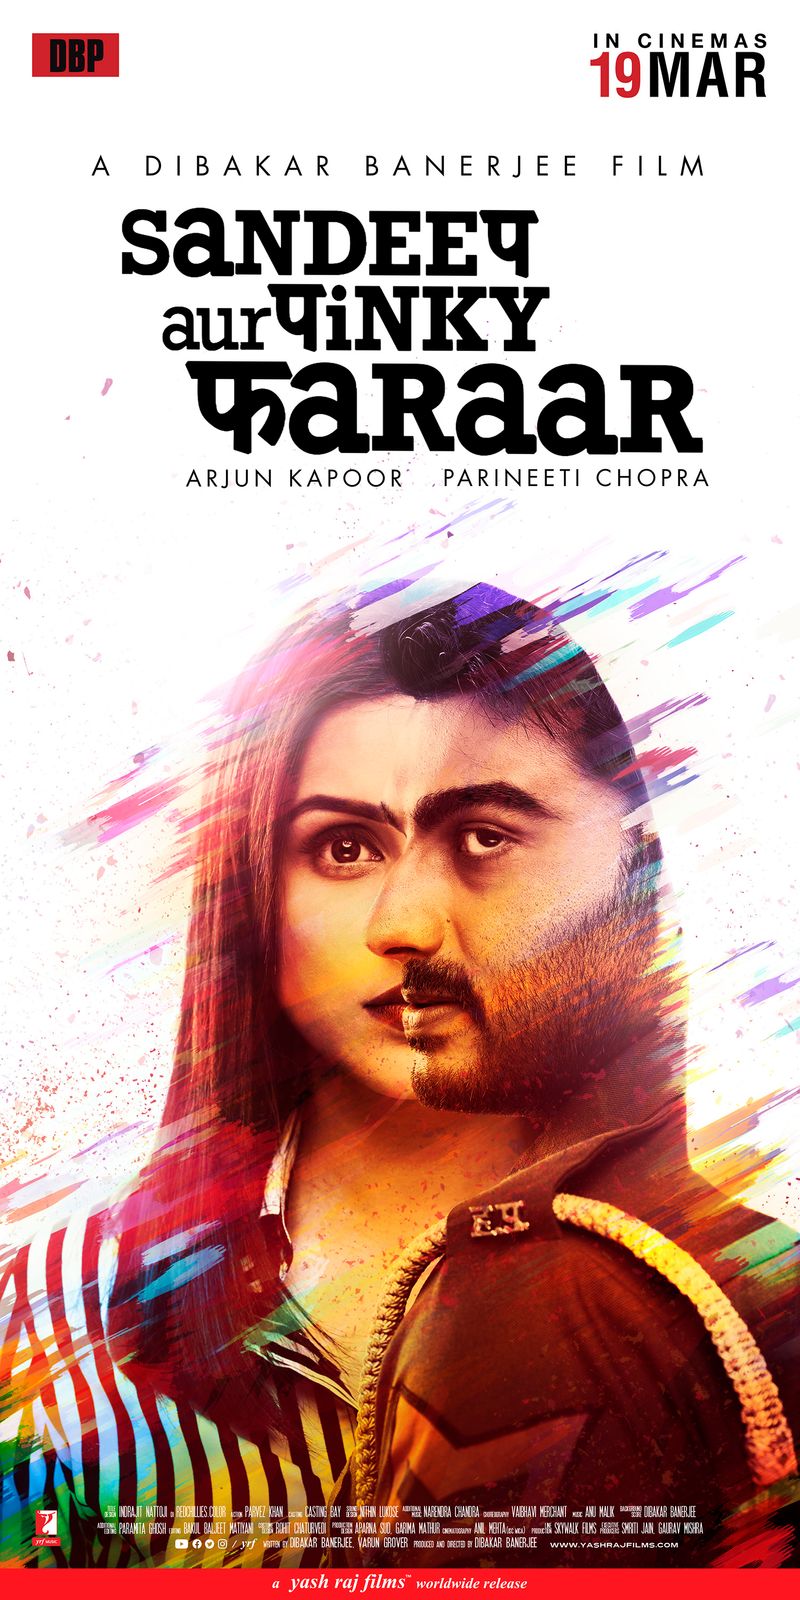 Sandeep Aur Pinky Faraar: Arjun Kapoor-Parineeti Chopra Starrer's Trailer 2 To Release Tomorrow,, See New Poster